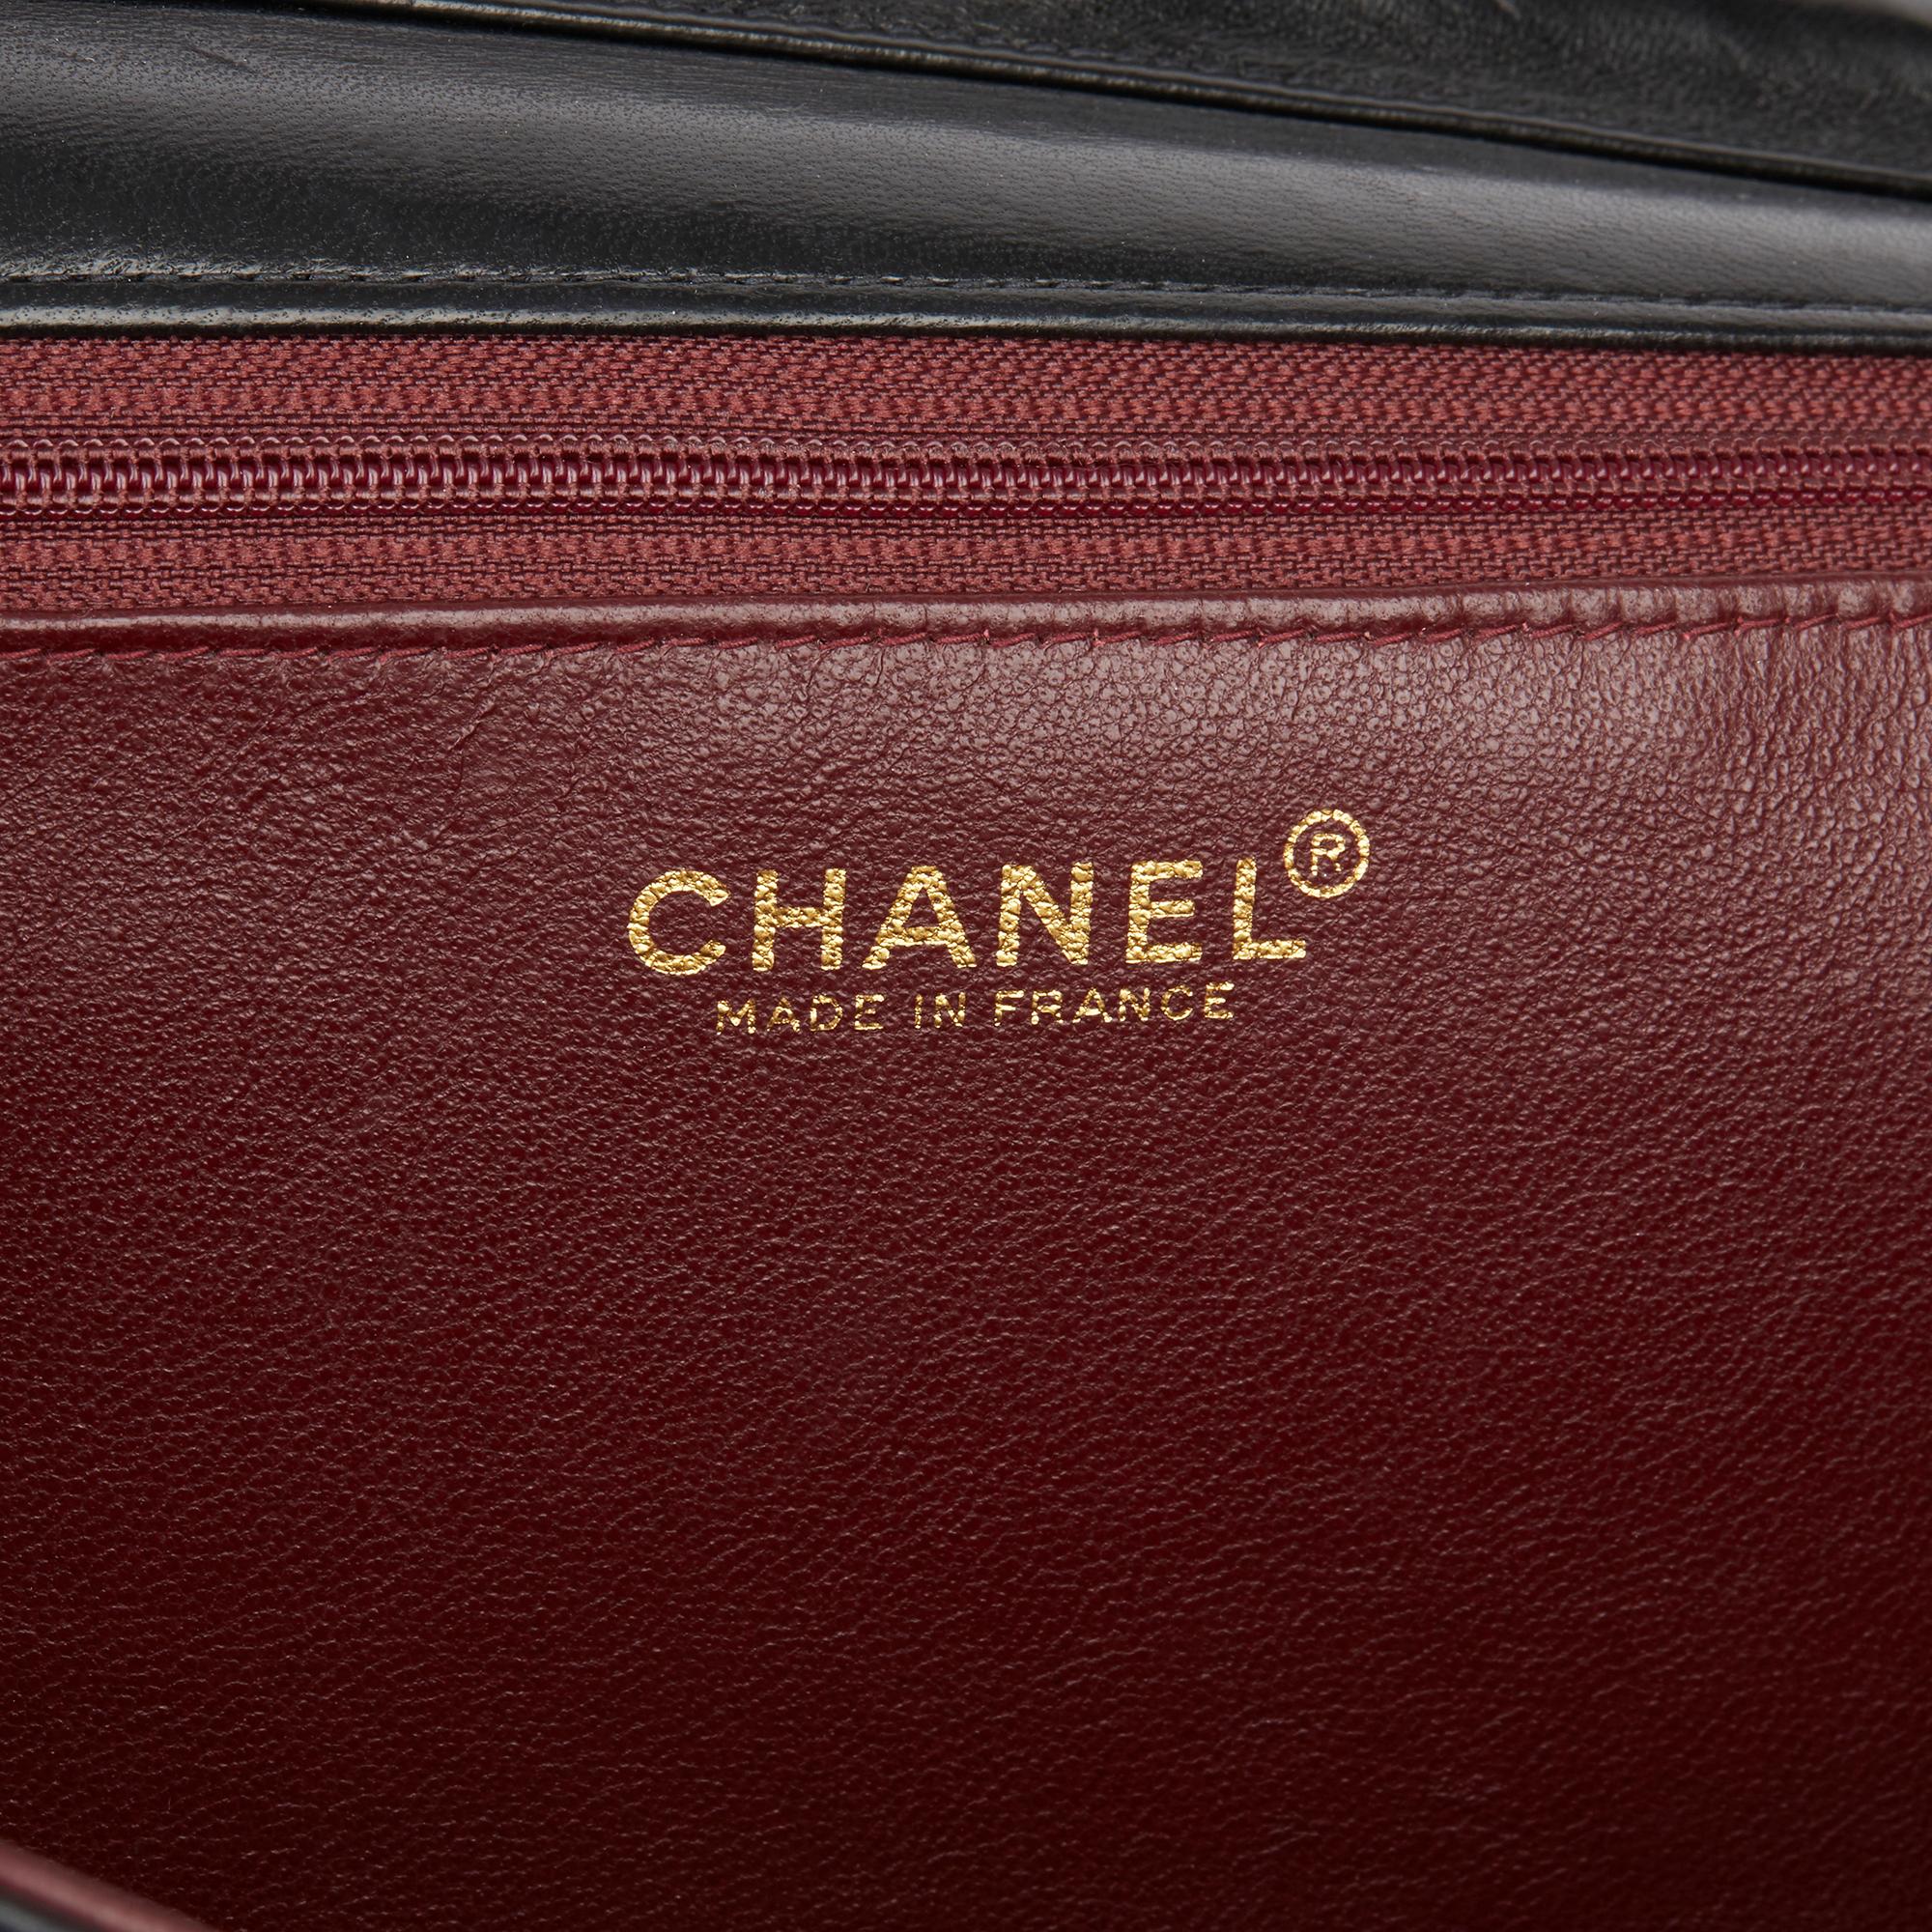 2000 Chanel Black Quilted Lambskin Vintage Medium Classic Single Flap Bag  1